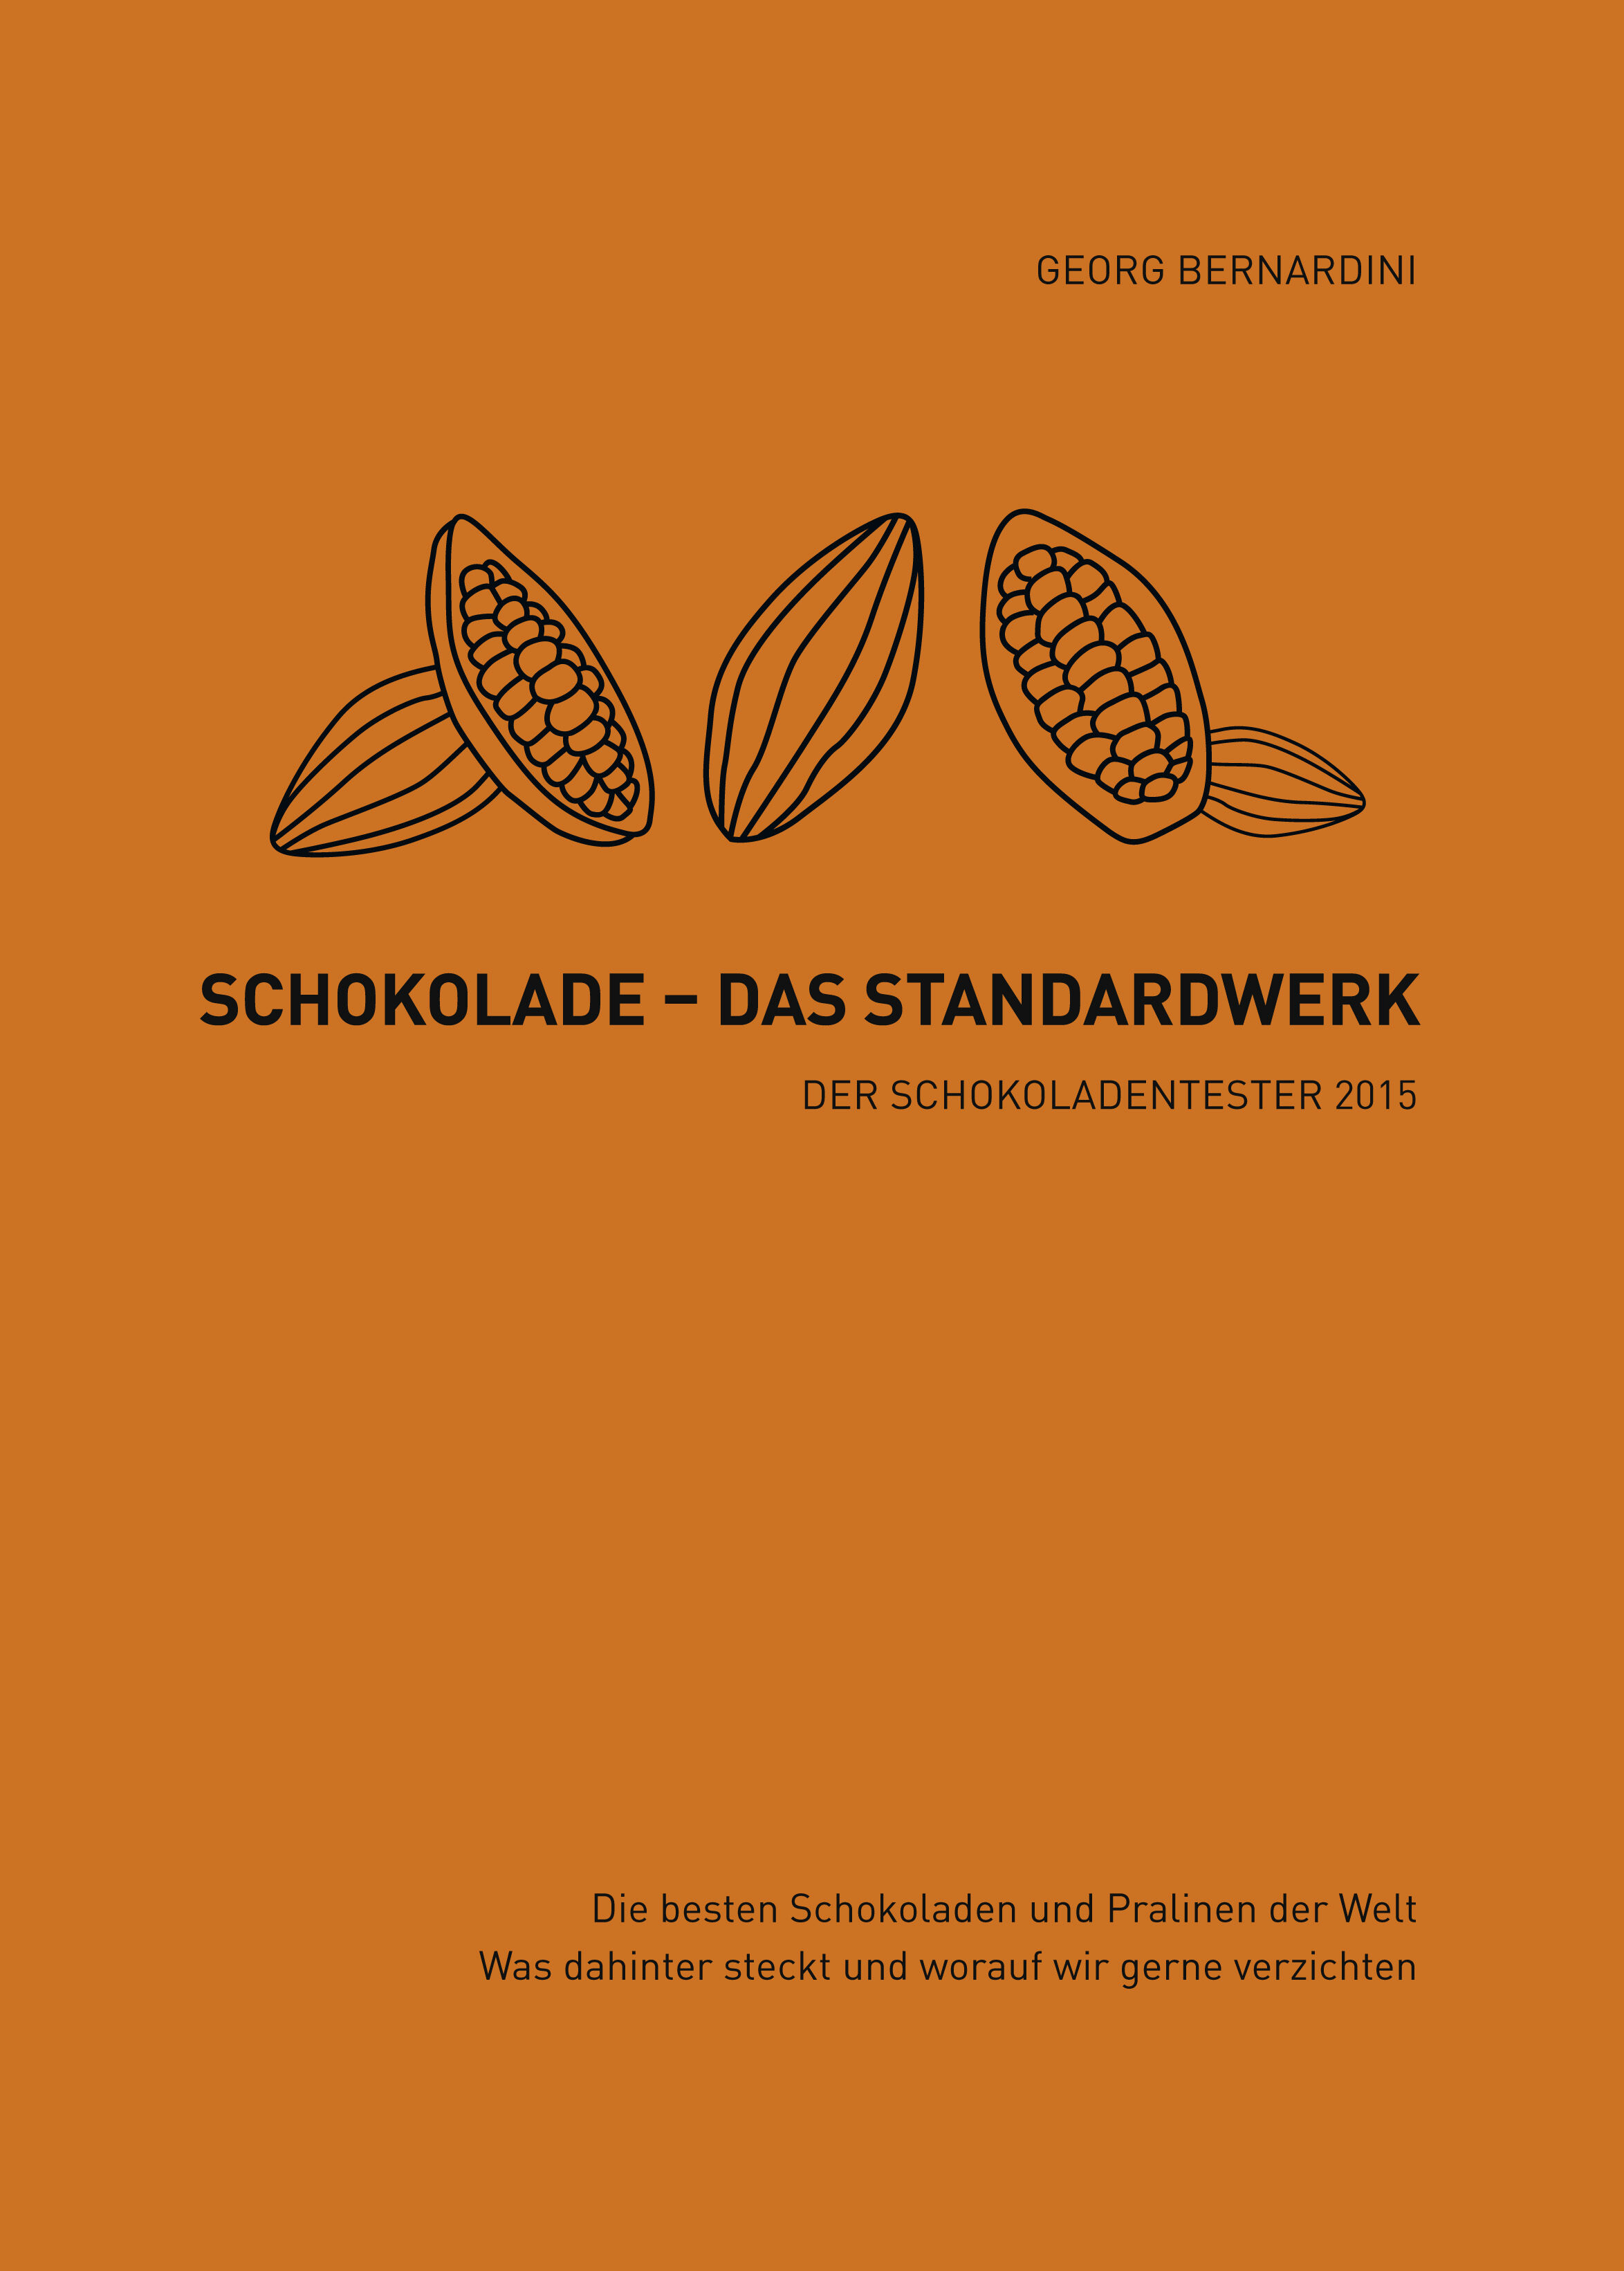 schokolade – das standardwerk georg bernardini sachkundebuch kochkultur esskultur